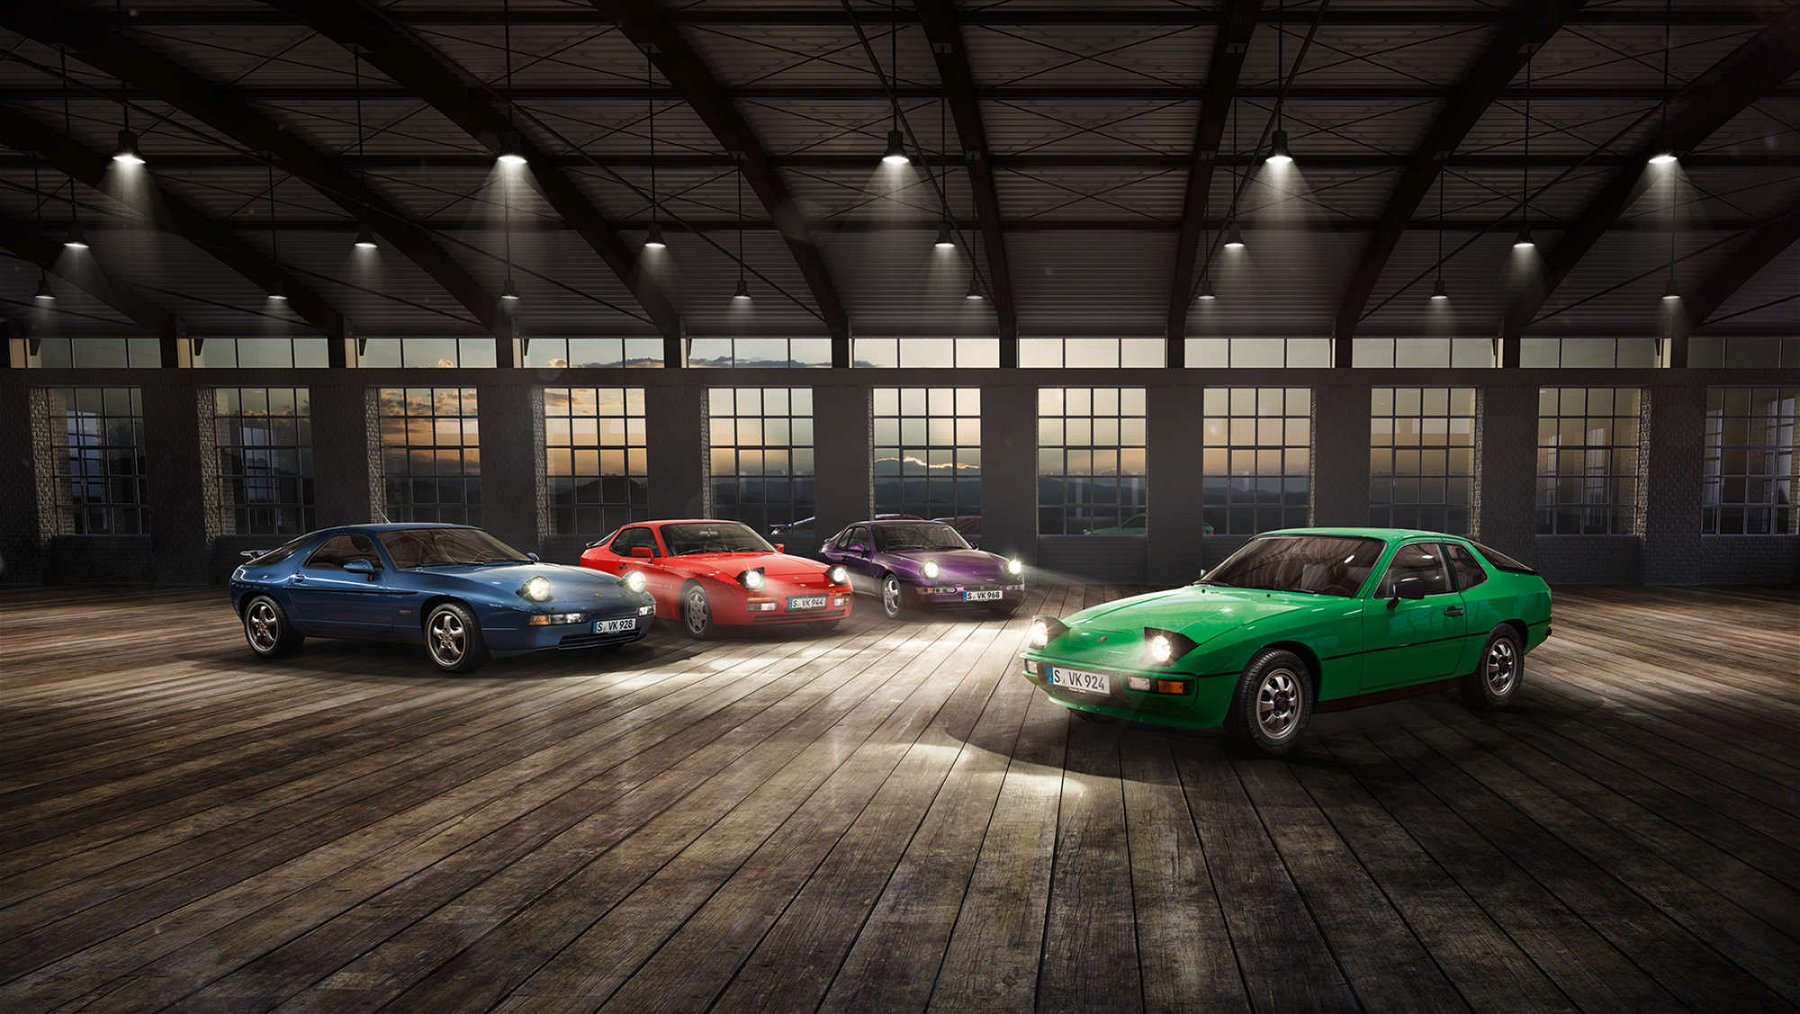 The transaxle era – When Porsche redefined itself